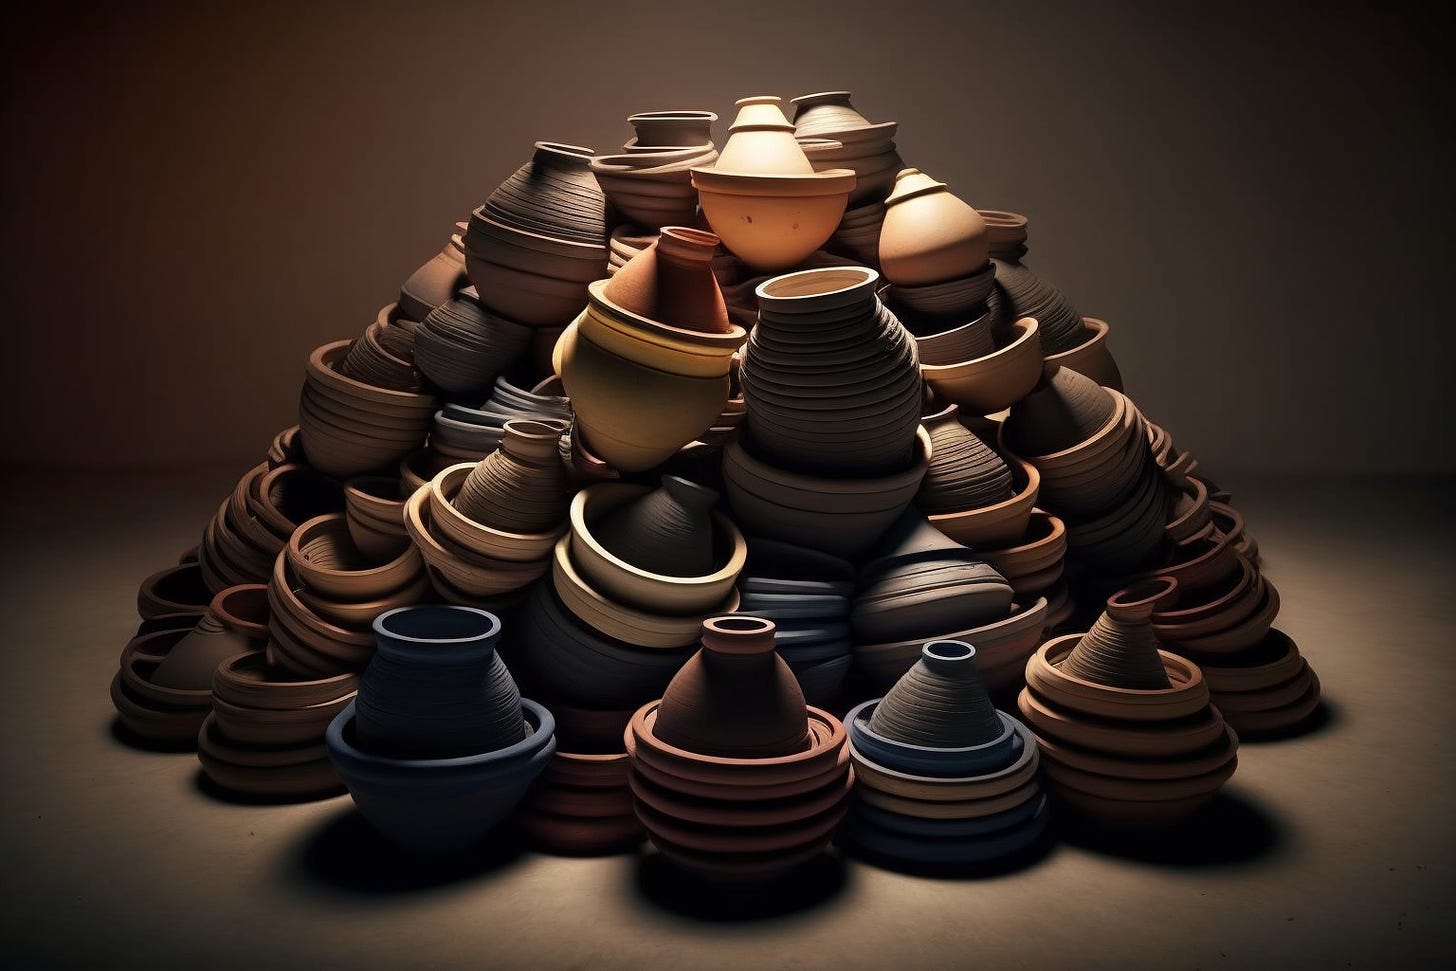 A pile of semi-misshapen ceramic pots, museum downlighting. AI generated image.